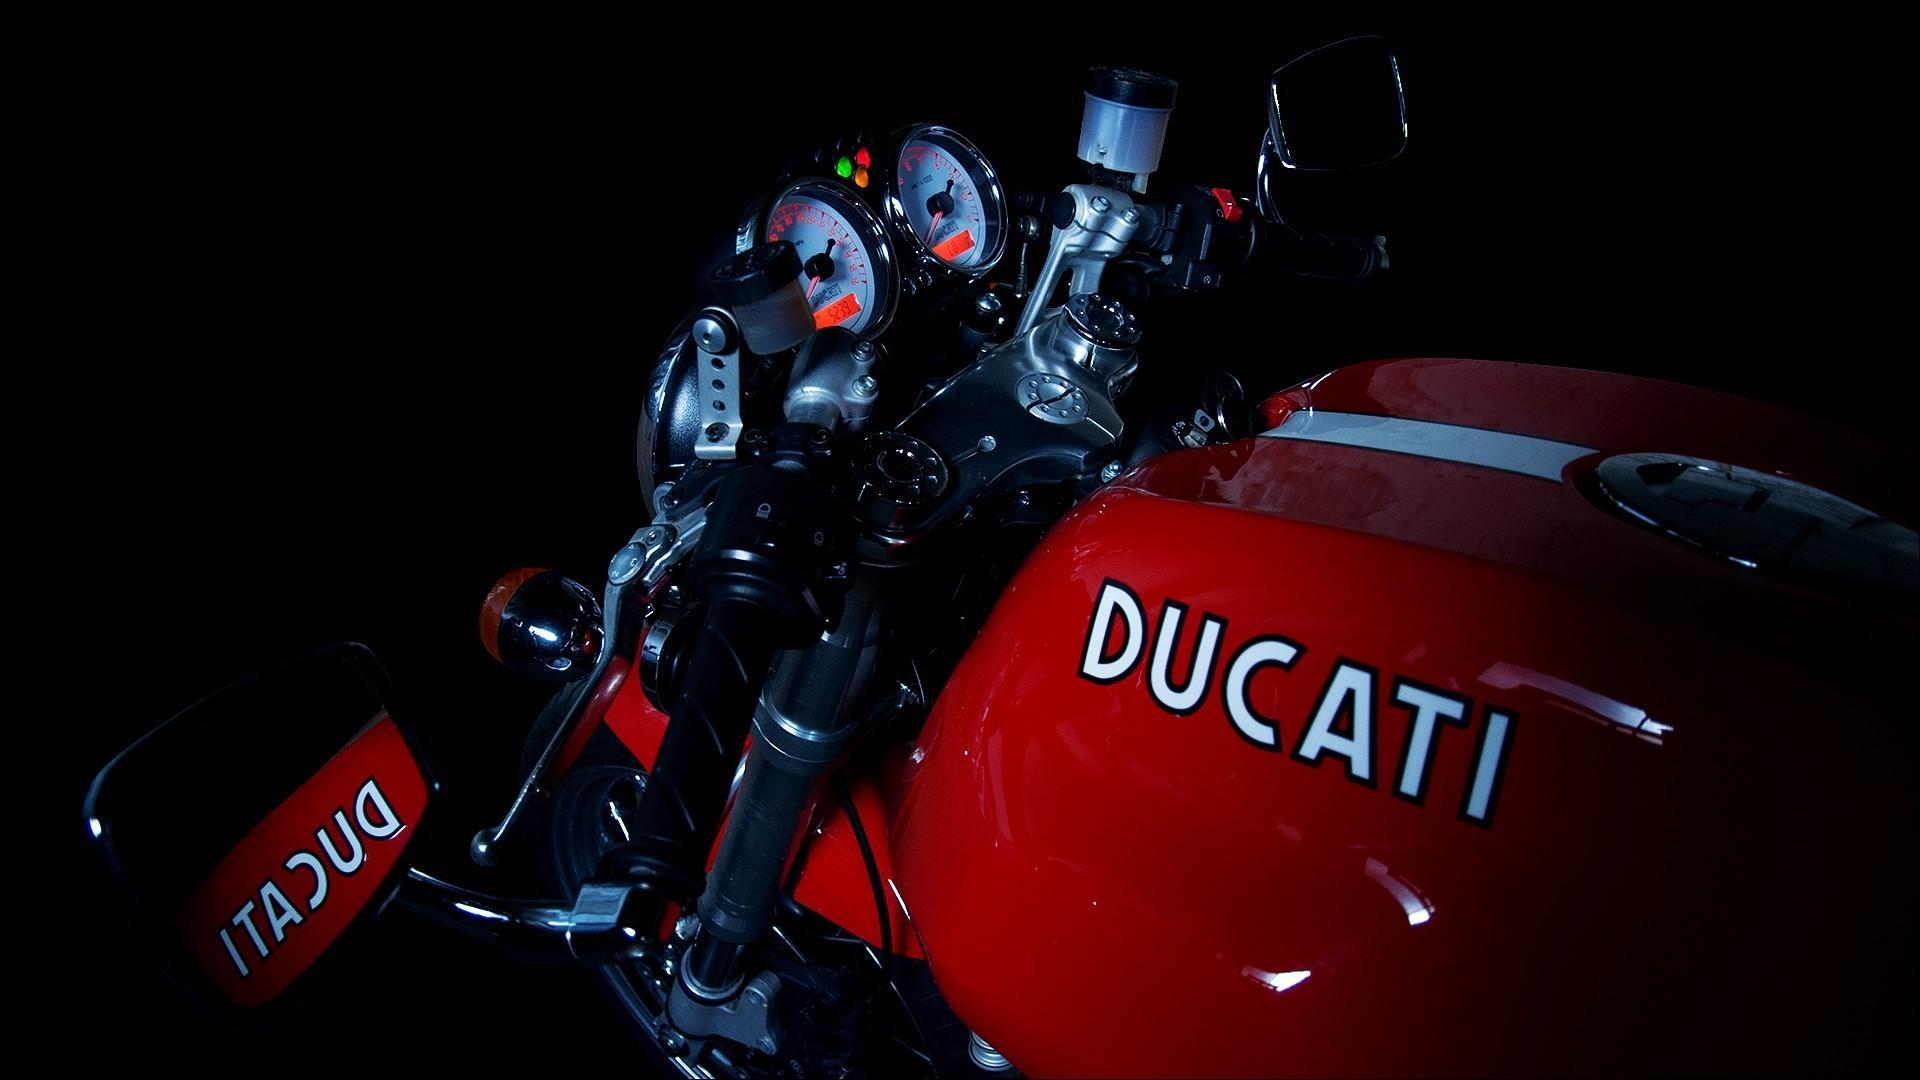 Classic tron legacy ducati motorcycles sport 1000 biposto